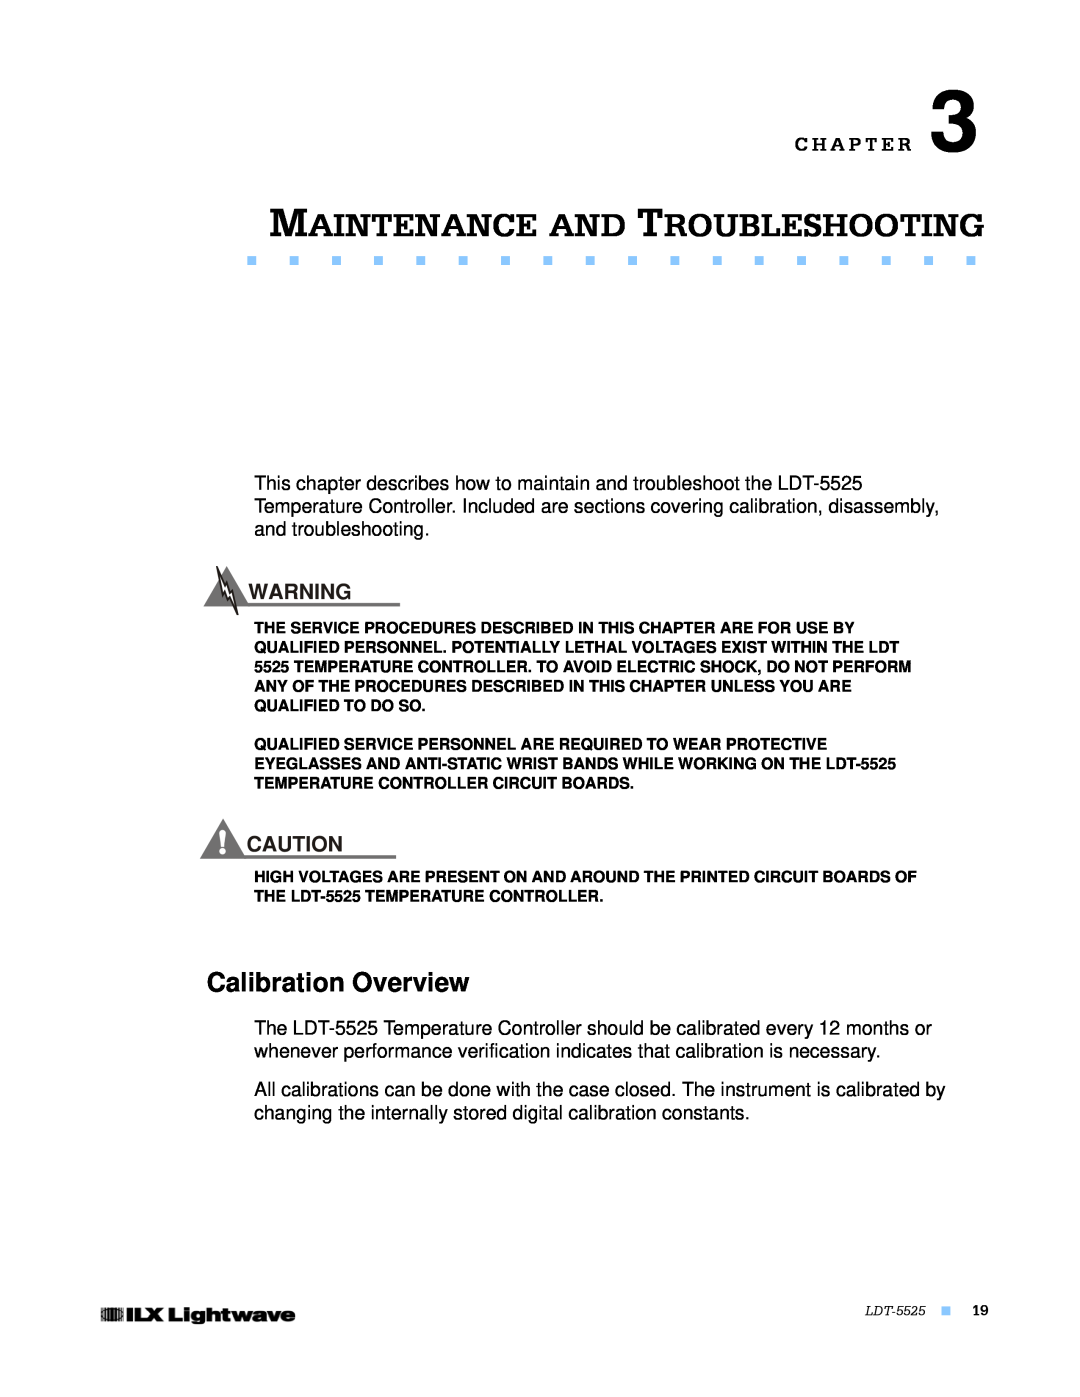 Lightwave Communications LDT-5525 manual Maintenance And Troubleshooting, Calibration Overview, C H A P T E R 